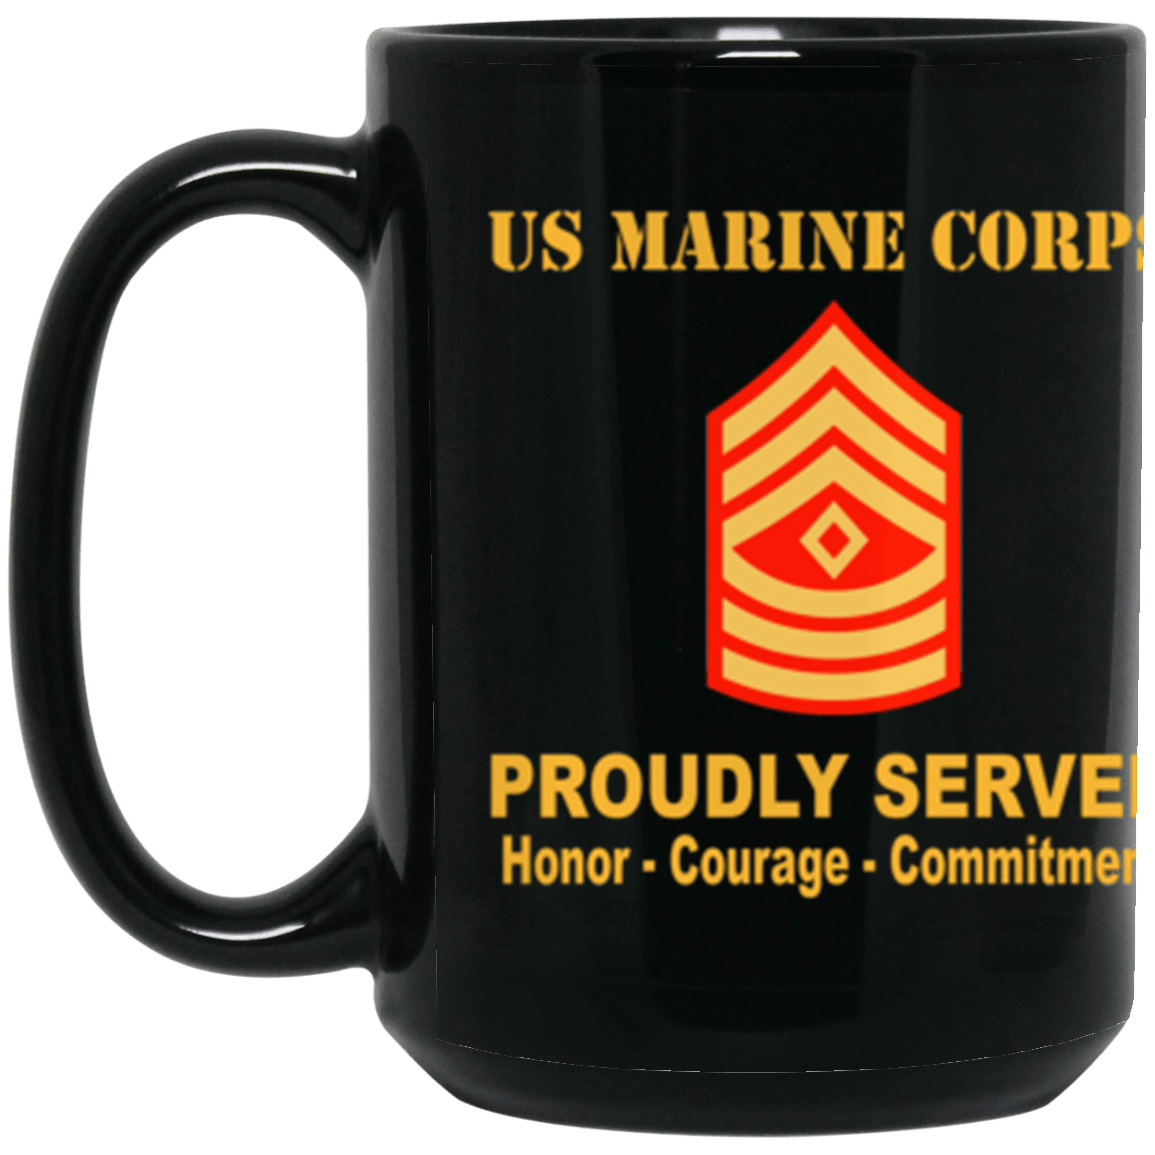 USMC E-8 First Sergeant E8 1stSg Senior Enlisted Advisor Ranks Proudly Served Core Values 15 oz. Black Mug